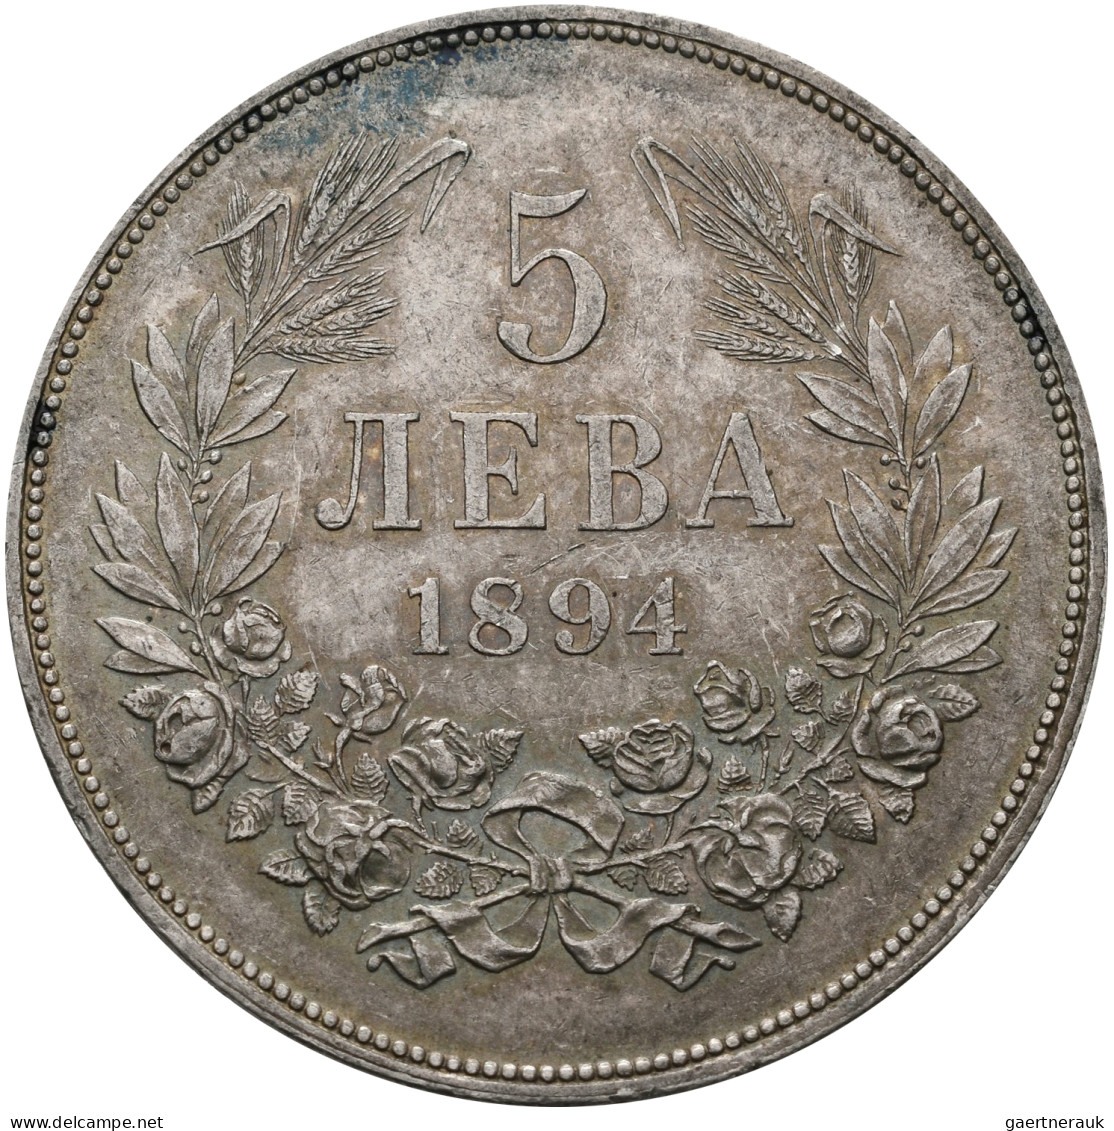 Bulgarien: Ferdinand I. 1887-1908: 5 Leva 1894, KM# 18, Fast Vorzüglich. - Bulgarije